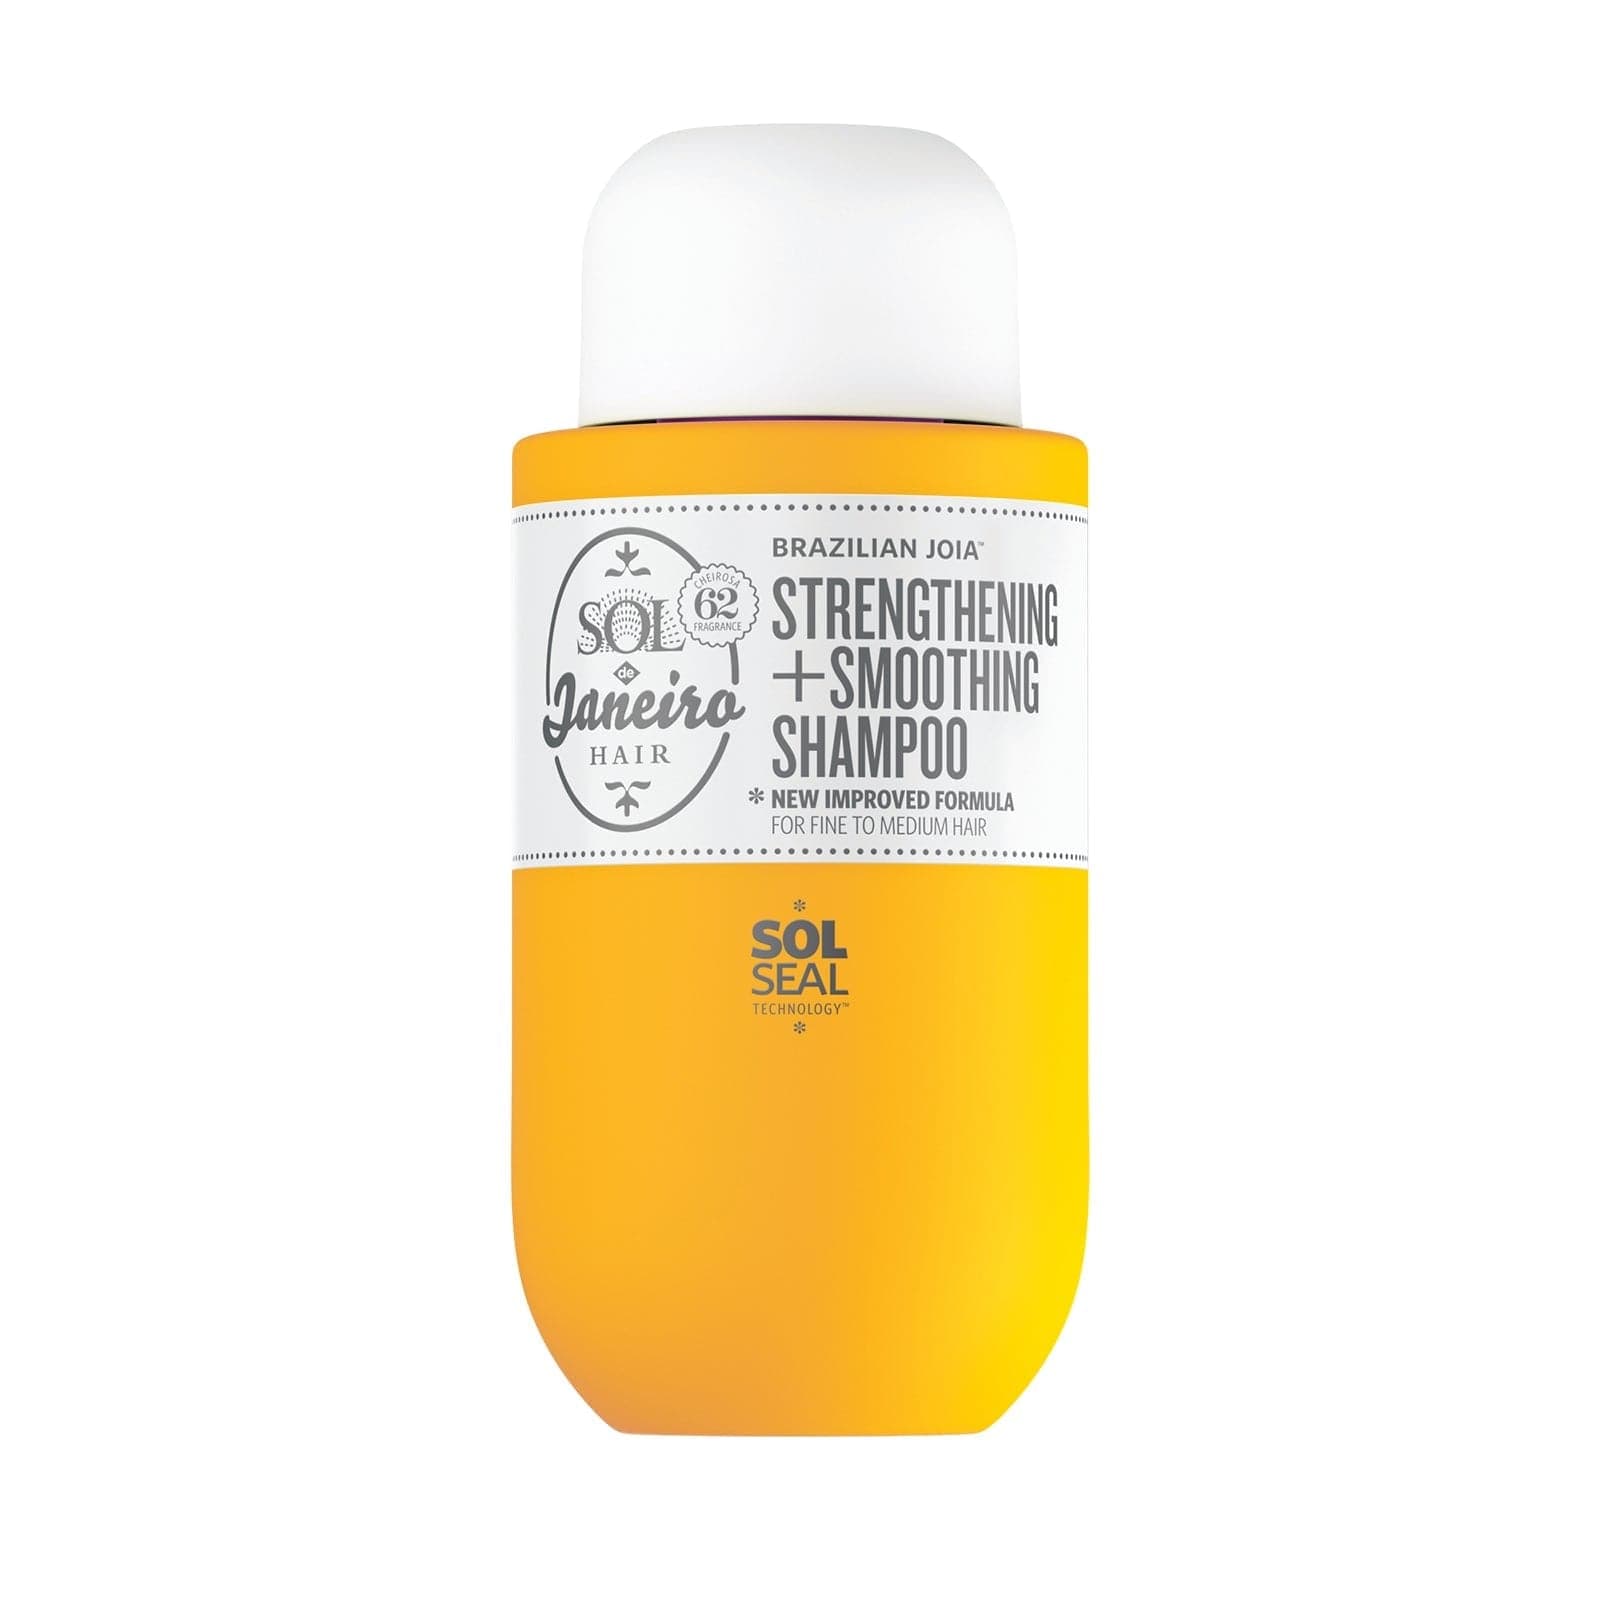 Brazilian joia strengthening + smoothing shampoo 90ml